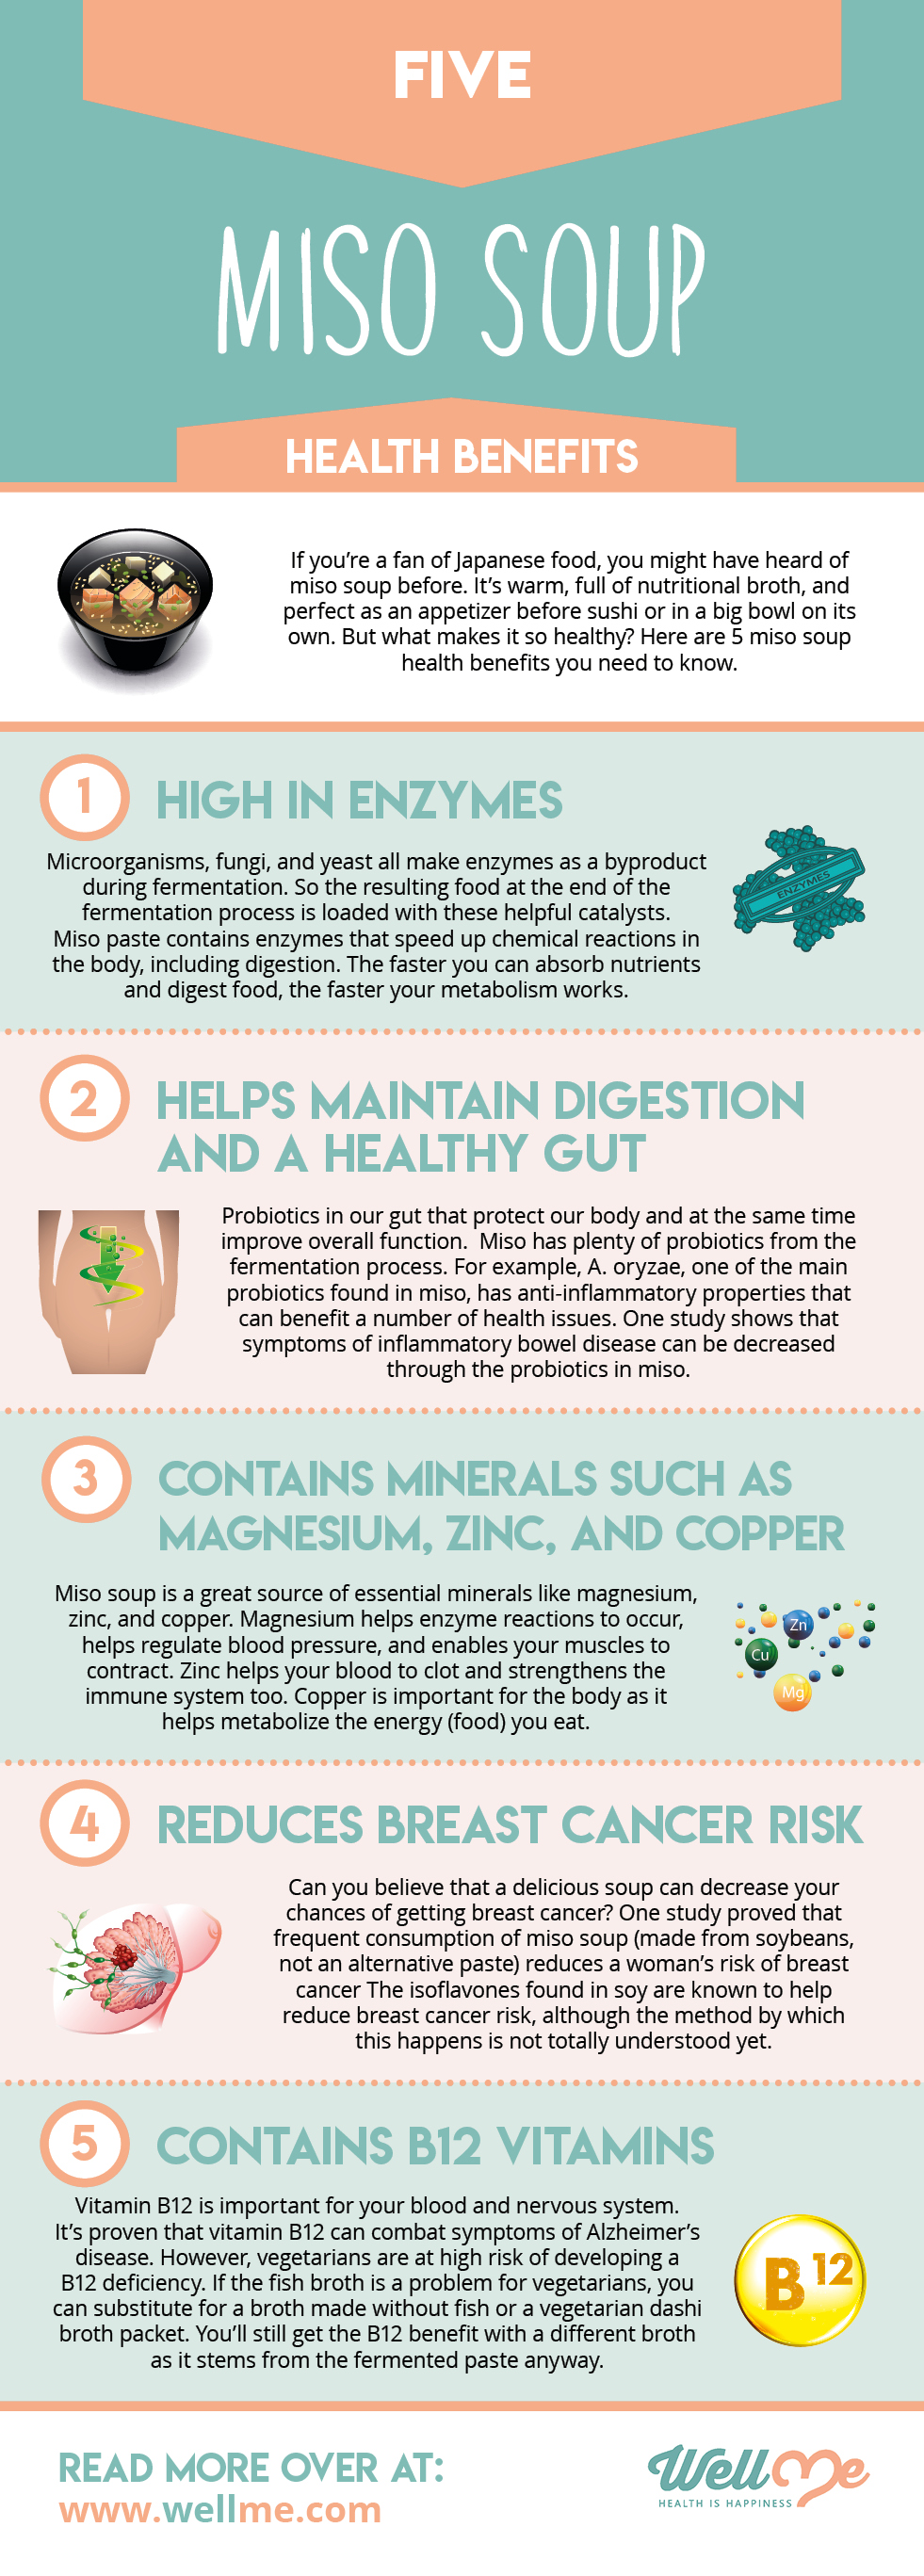 5 Miso Soup Health Benefits